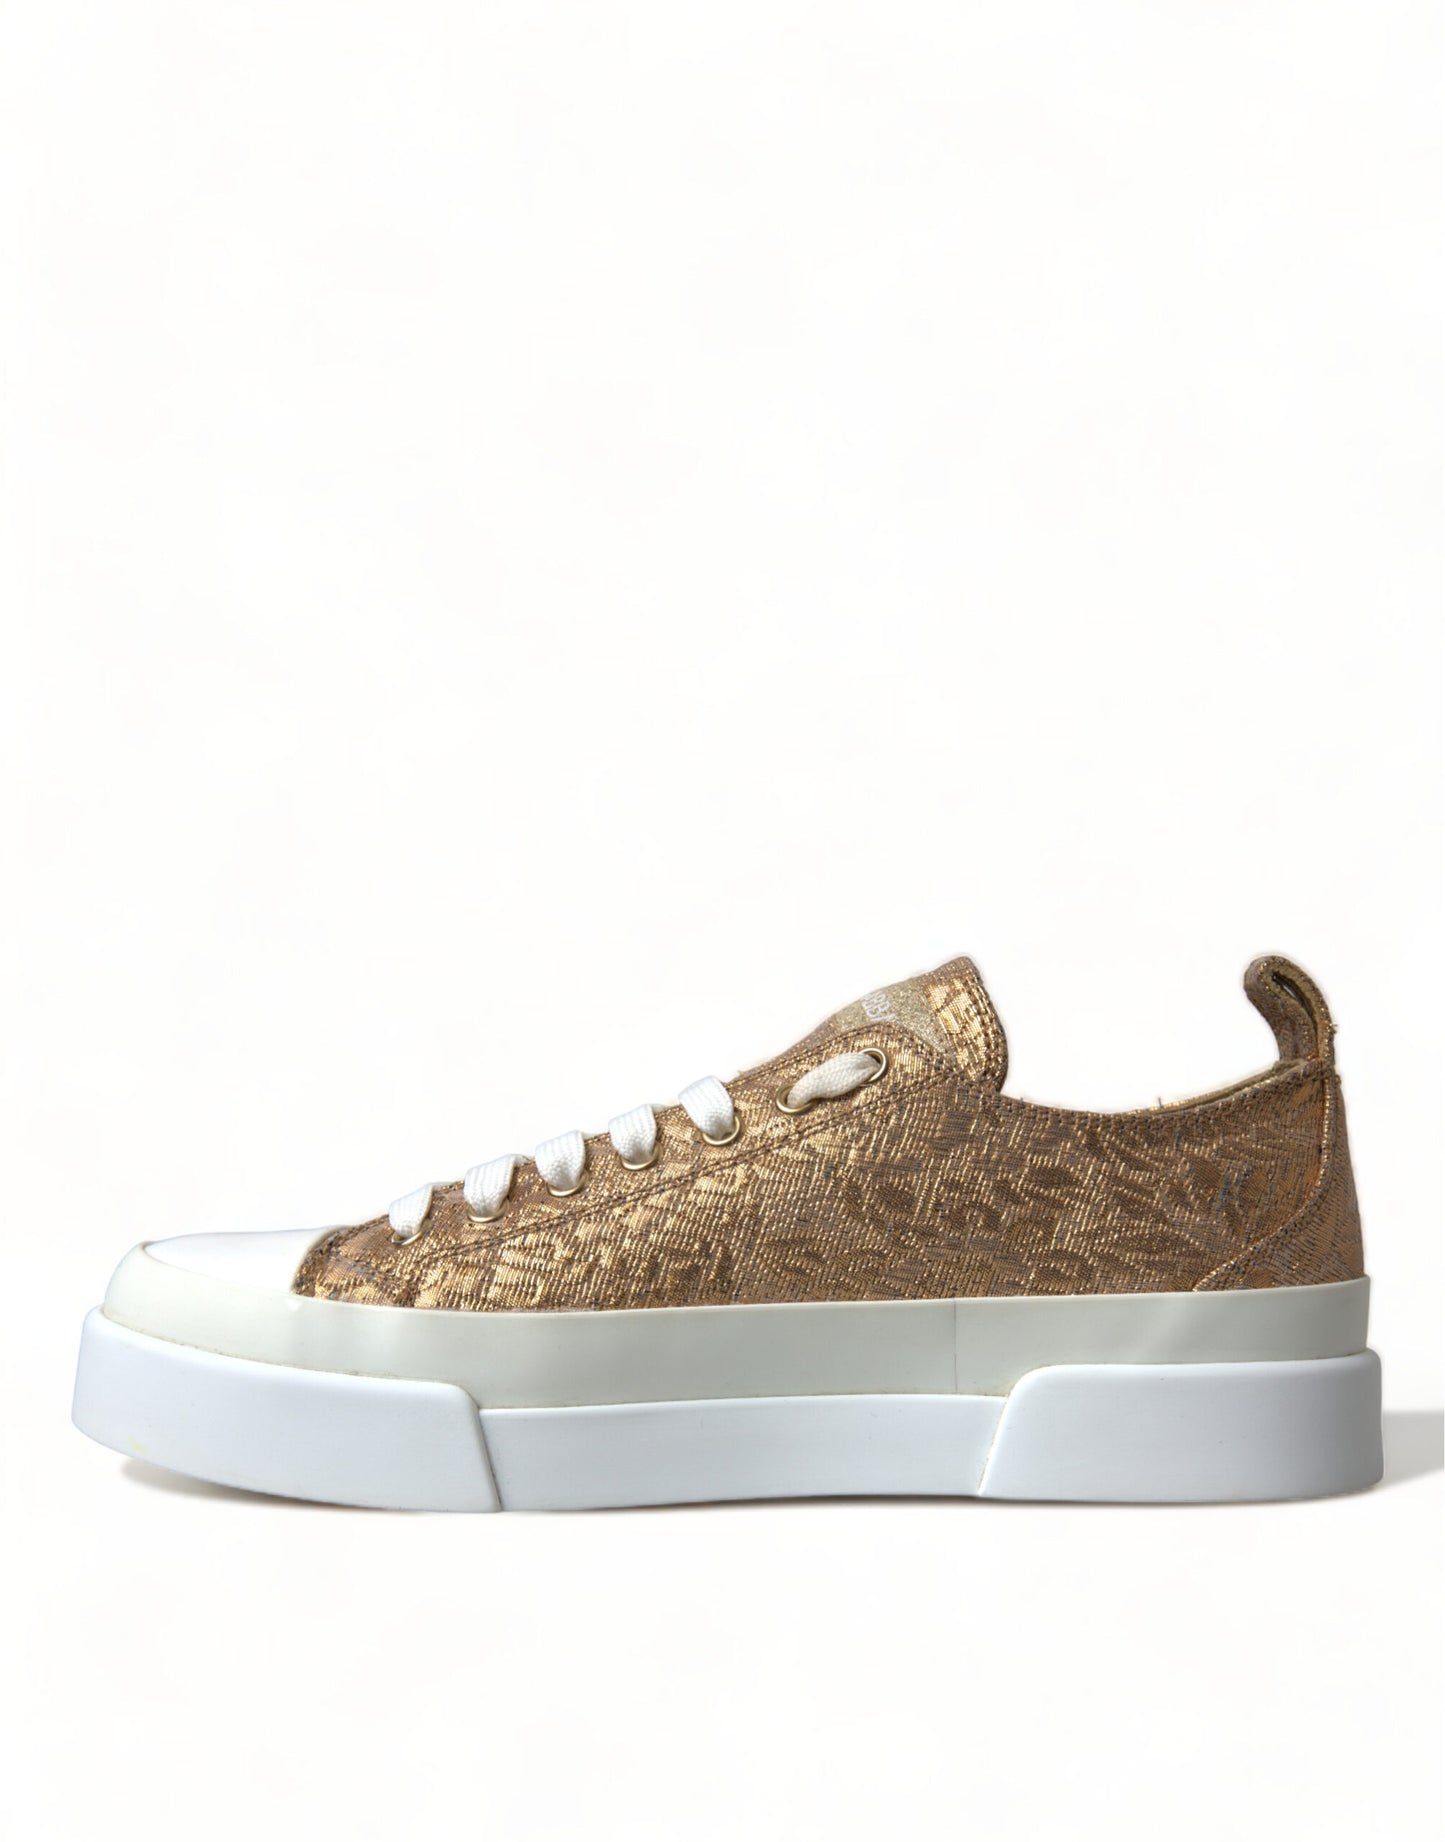 Dolce & Gabbana Elegant Gold Low-Top Sneakers - Chic Comfort Footwear